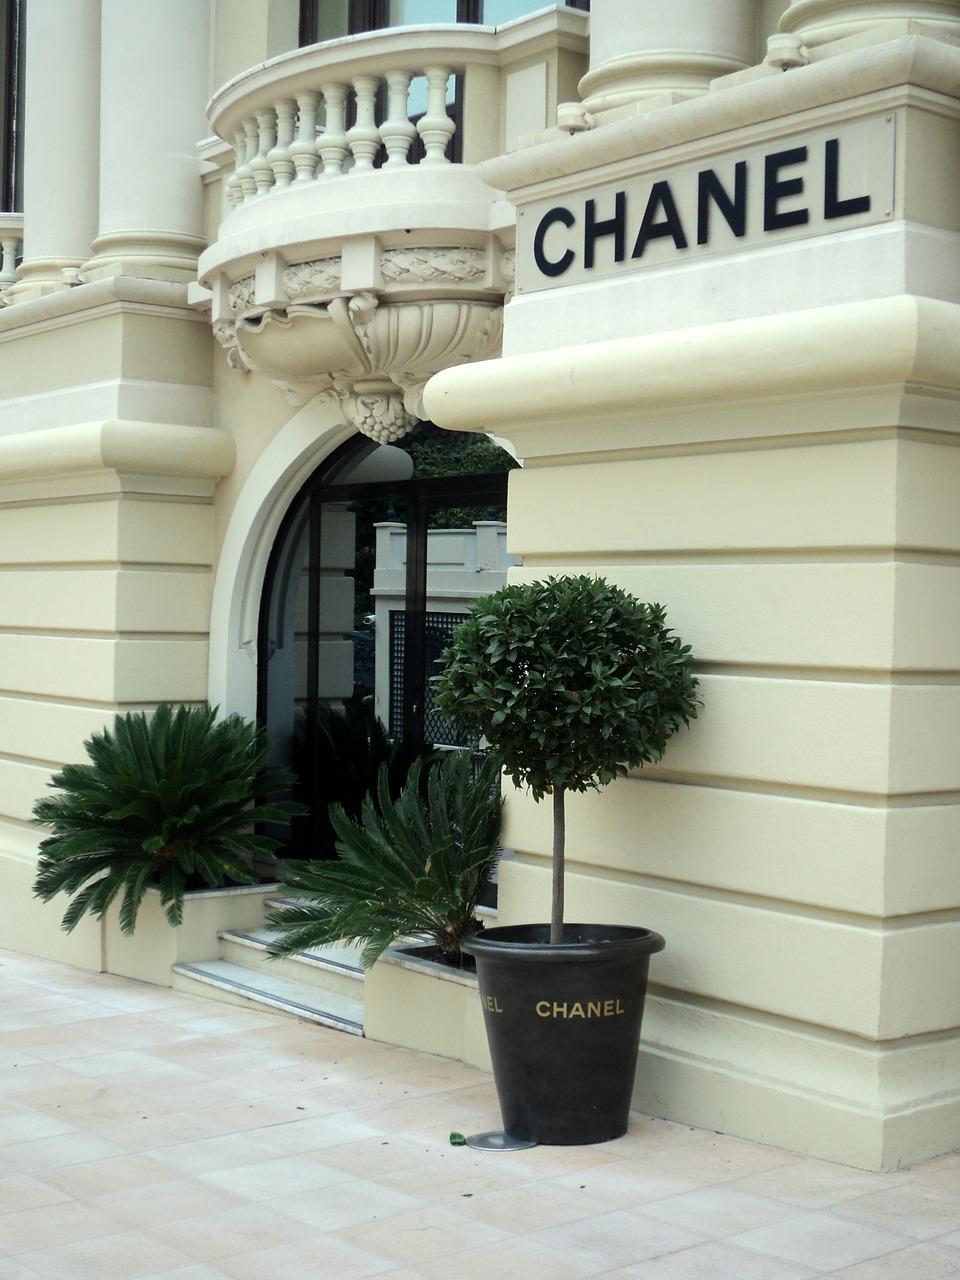 Chanel,monaco,côte d ' azur,luxury,free pictures - free image from needpix.com